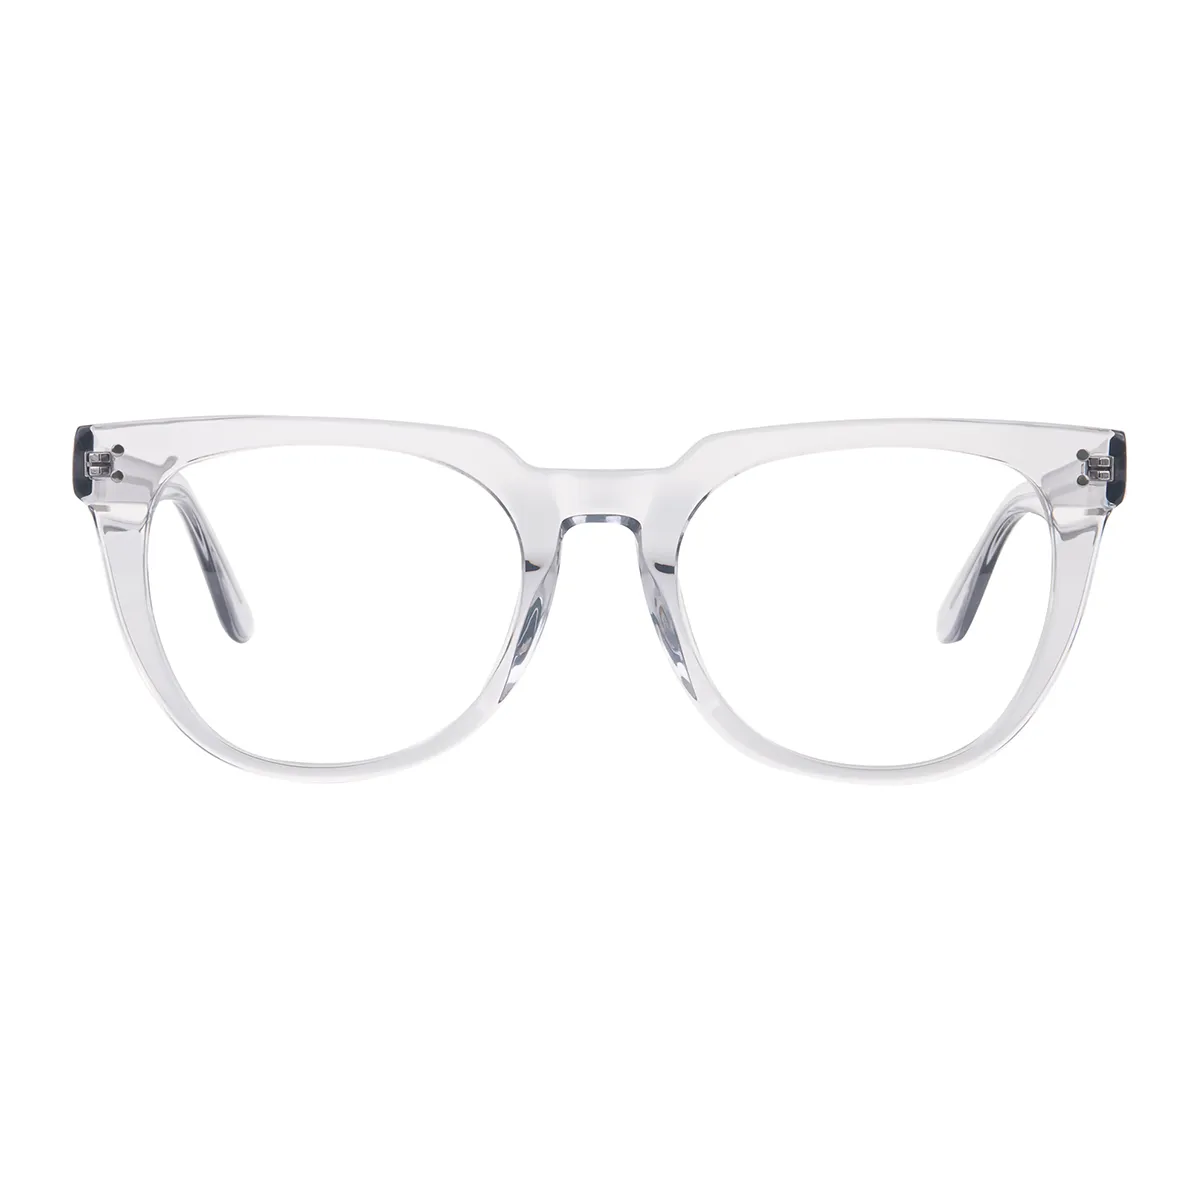 Dara - Square Translucent-Gray Glasses for Men & Women